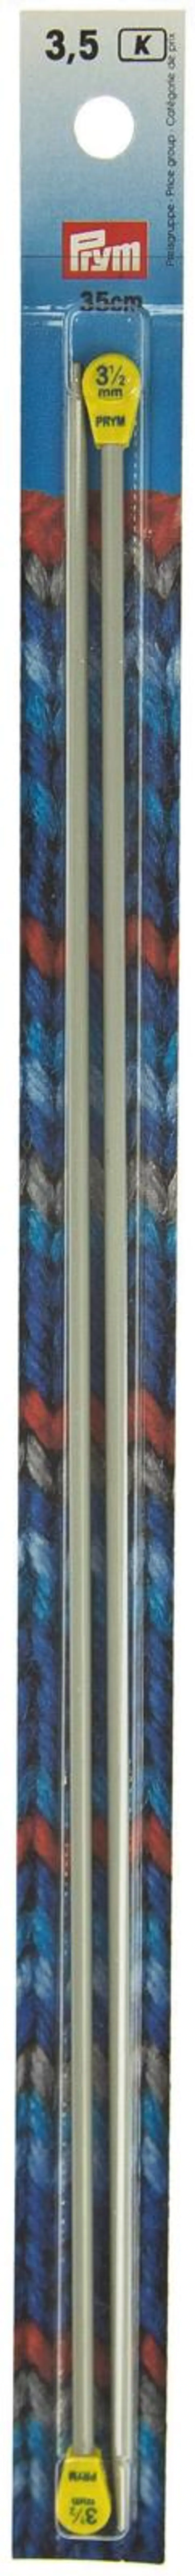 Prym neulepuikko 3,5 35cm harmaa | Prisma verkkokauppa